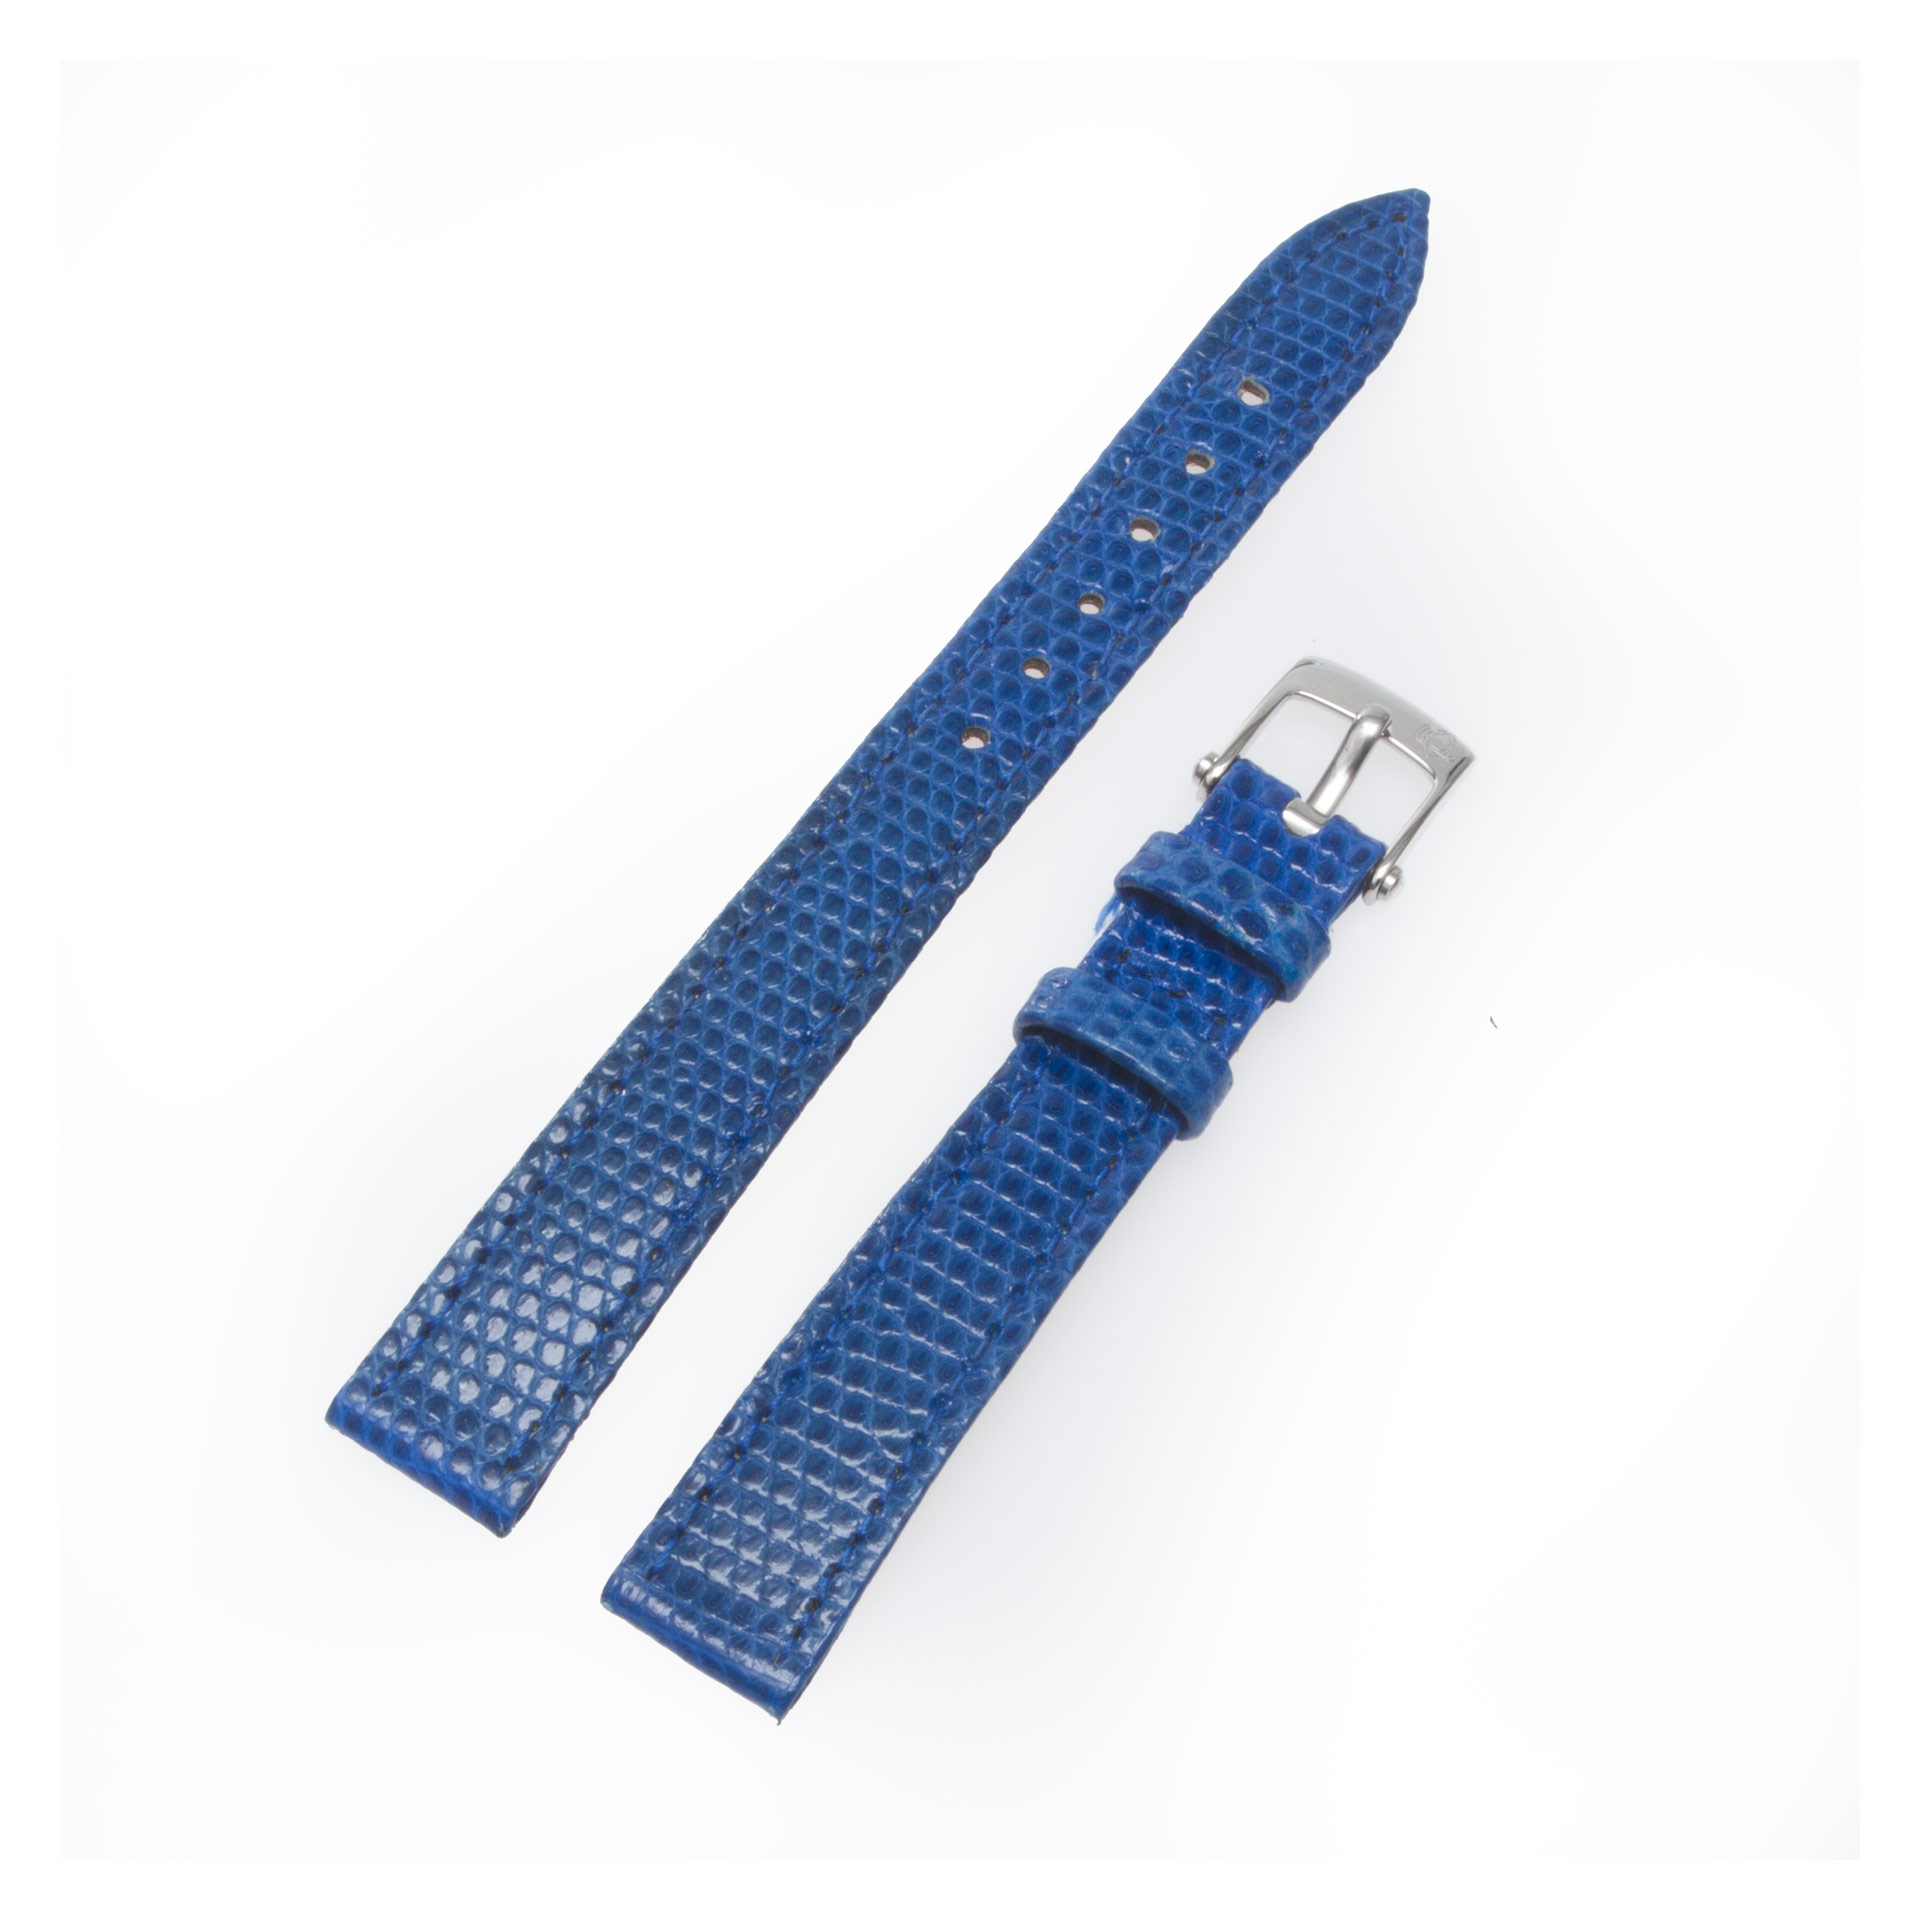 Van Cleef & Arpels blue lizard strap with stainless steel tang buckle 12mm x 10mm